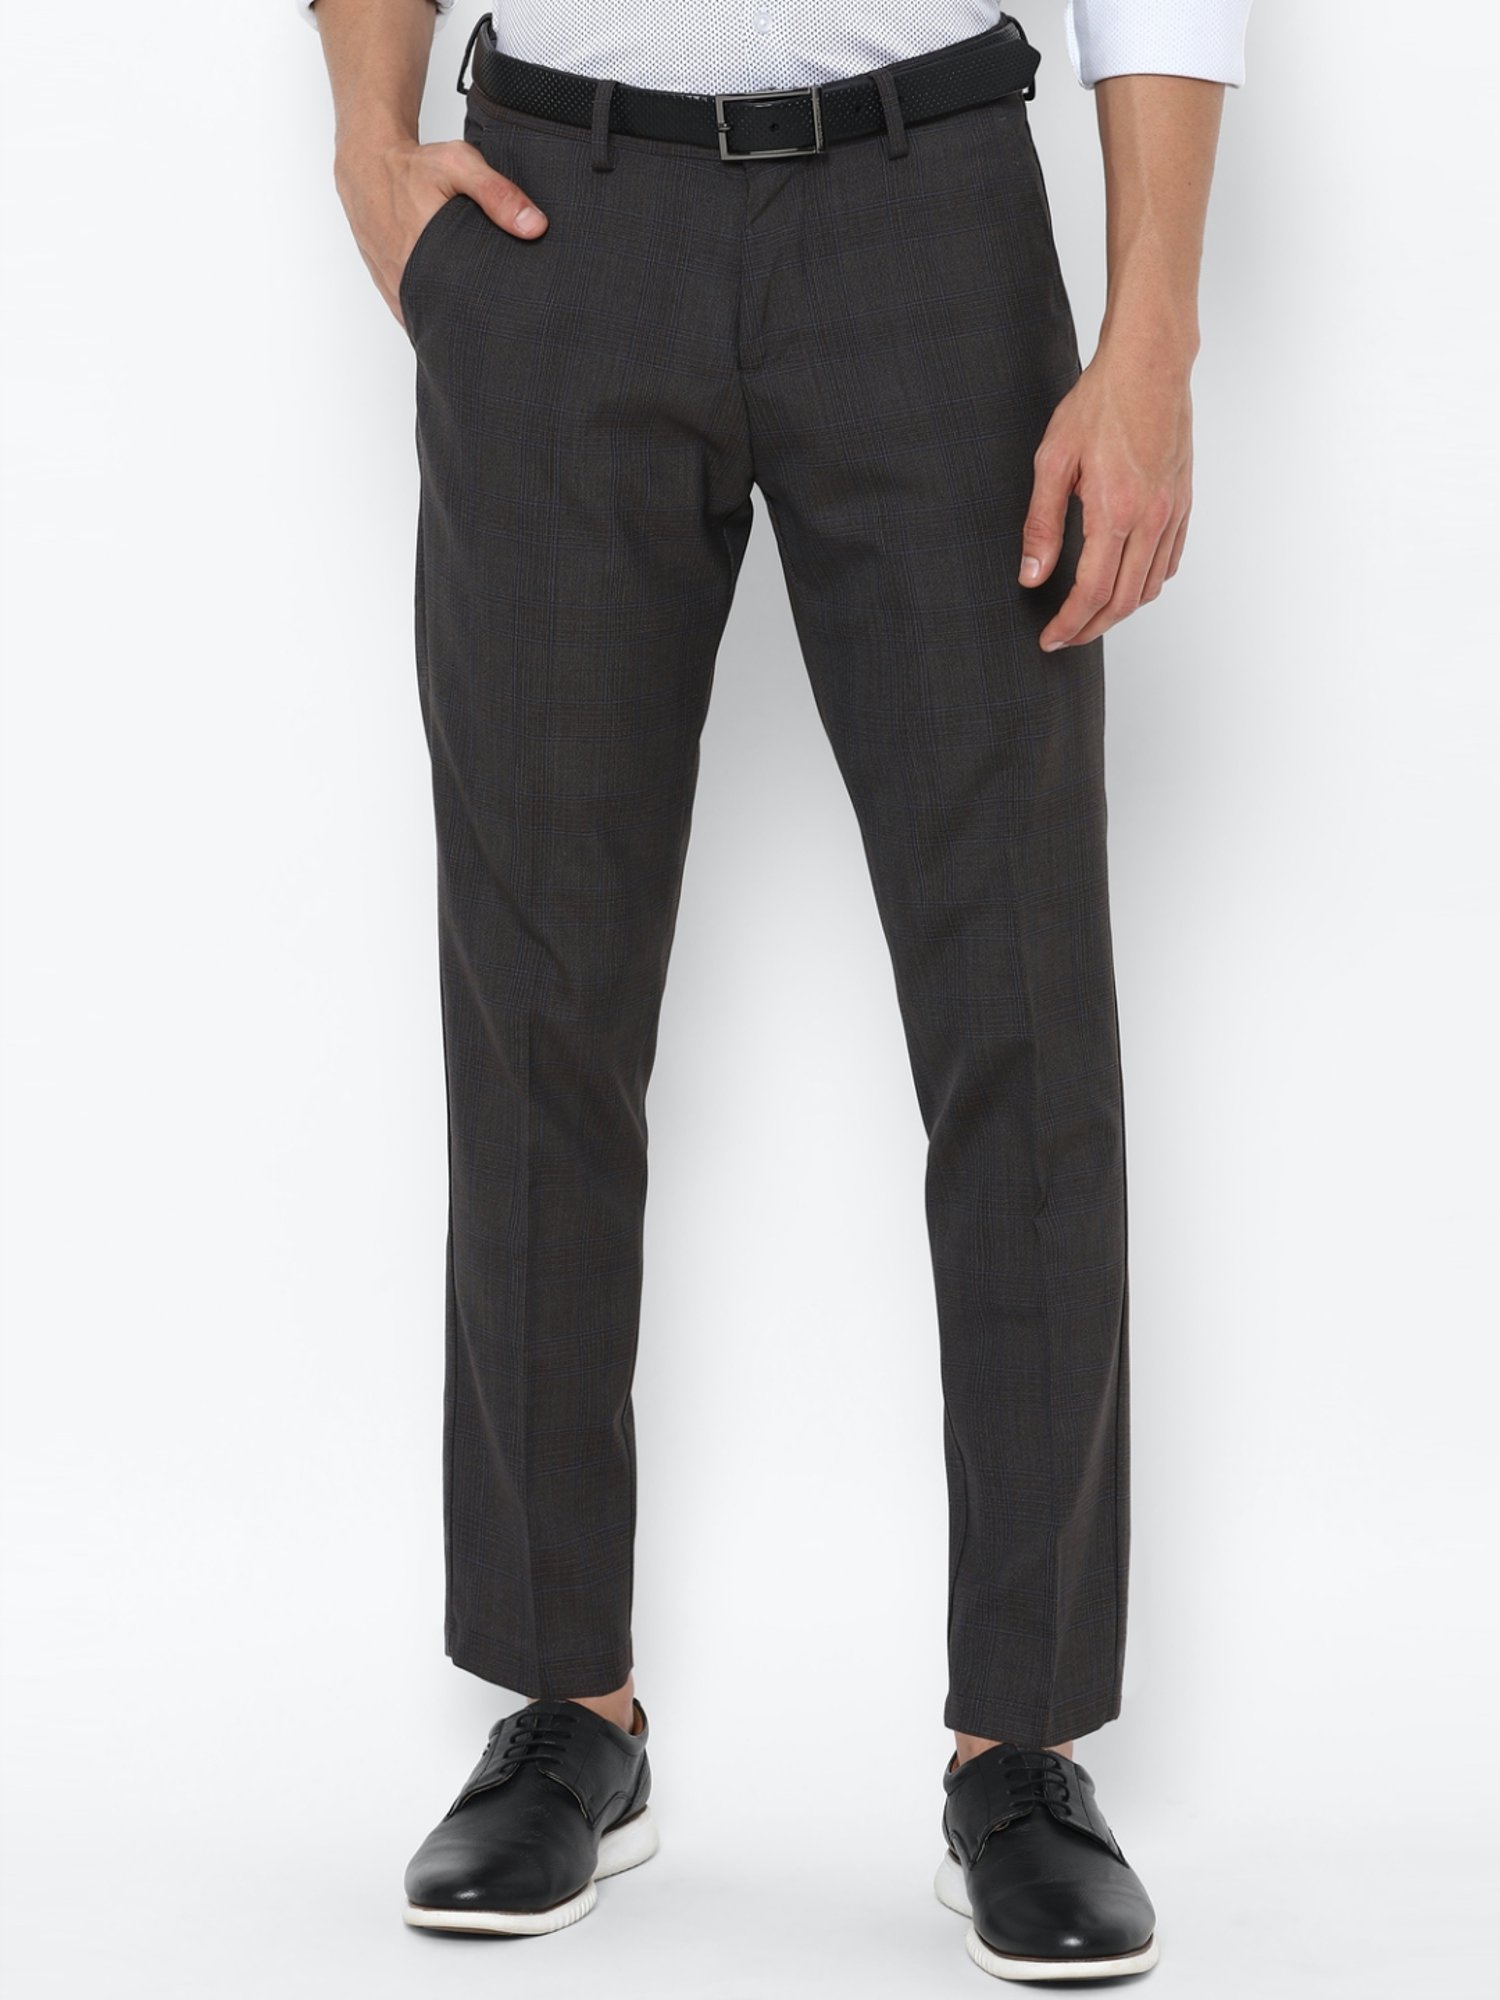 Allen solly grey trousers  Buy Allen solly grey trousers online in India